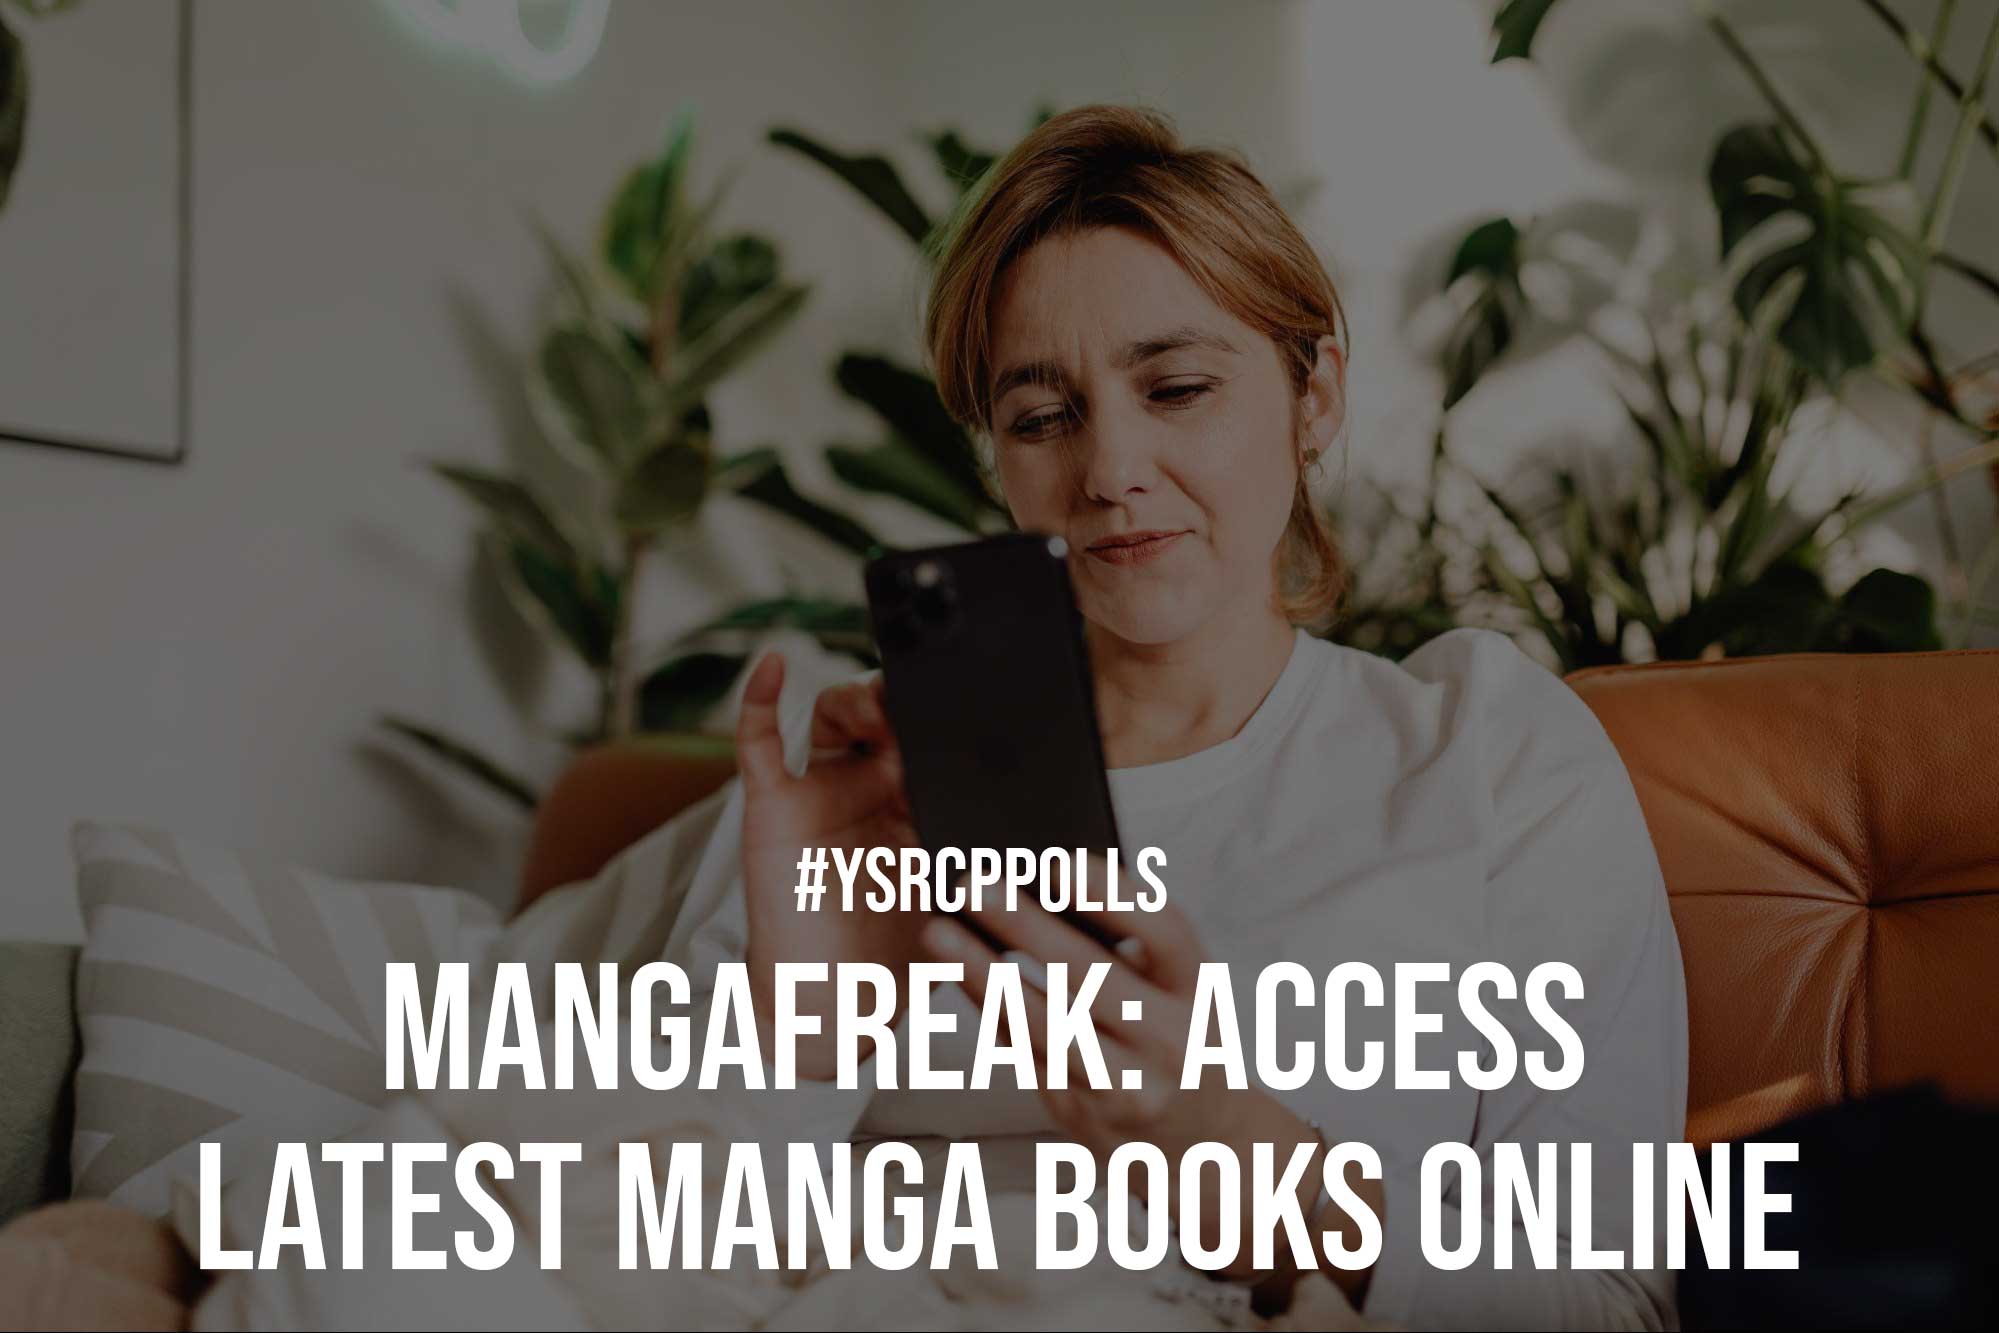 Mangafreak Access Latest Manga Books Online